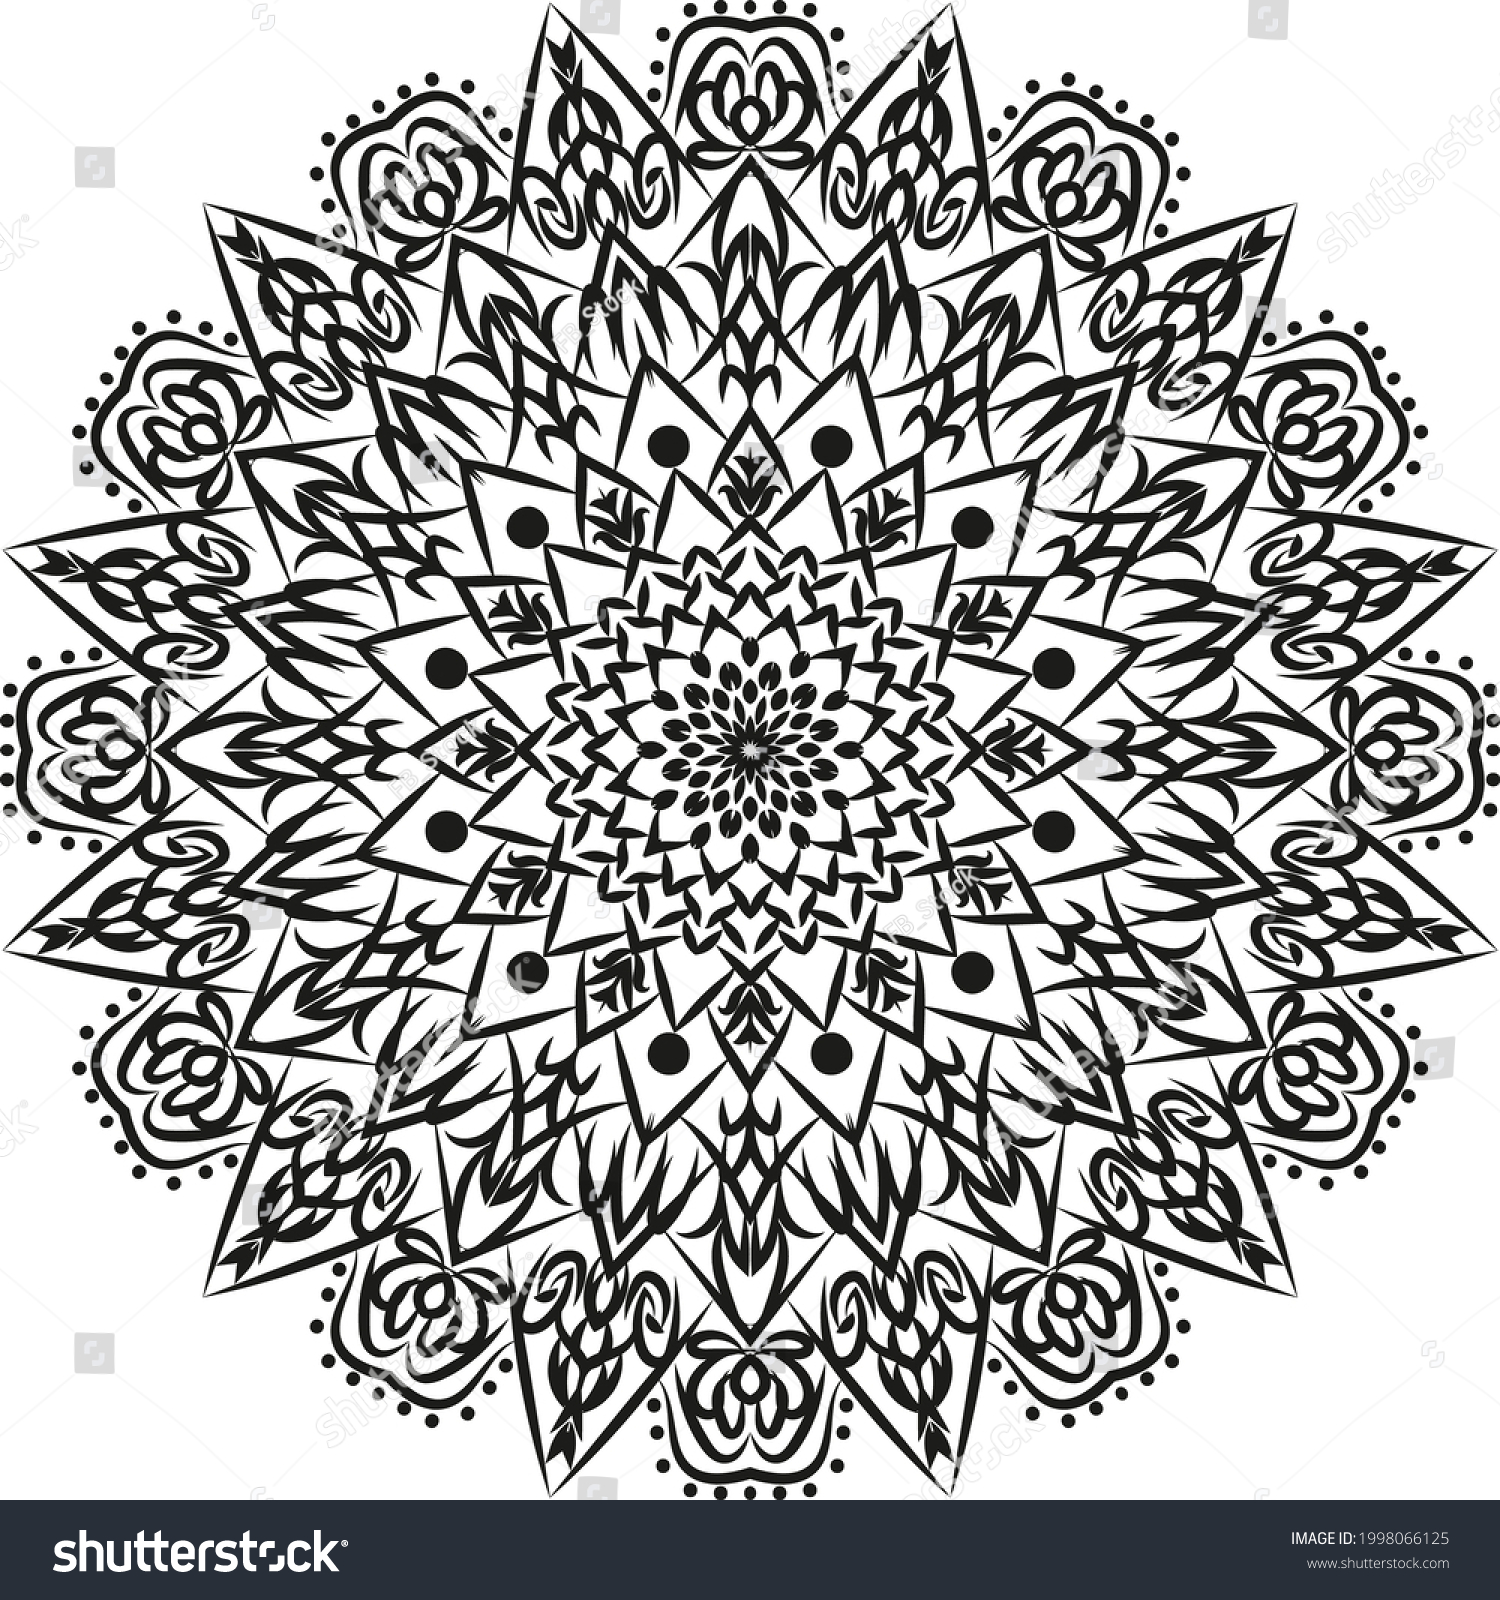 SVG of Black Mandala for Design | Mandala Circular pattern design for Henna, Mehndi, tattoo, decoration.
Decorative ornament in ethnic oriental style. Coloring book page.
 svg